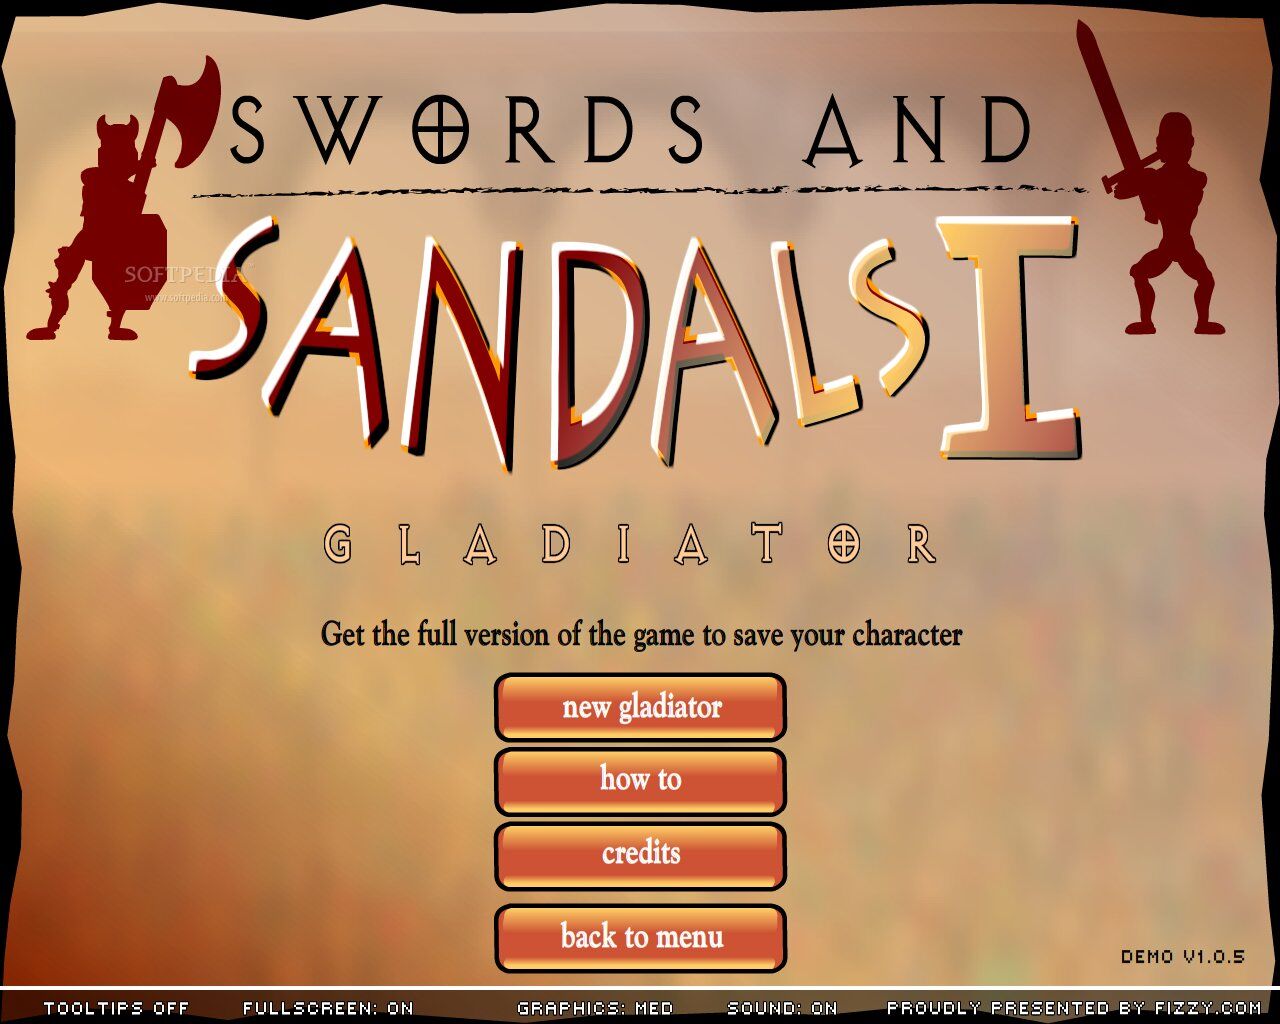 Uncle or Mister linear Association Swords and Sandals: Gladiator | Swords and sandals Wiki | Fandom